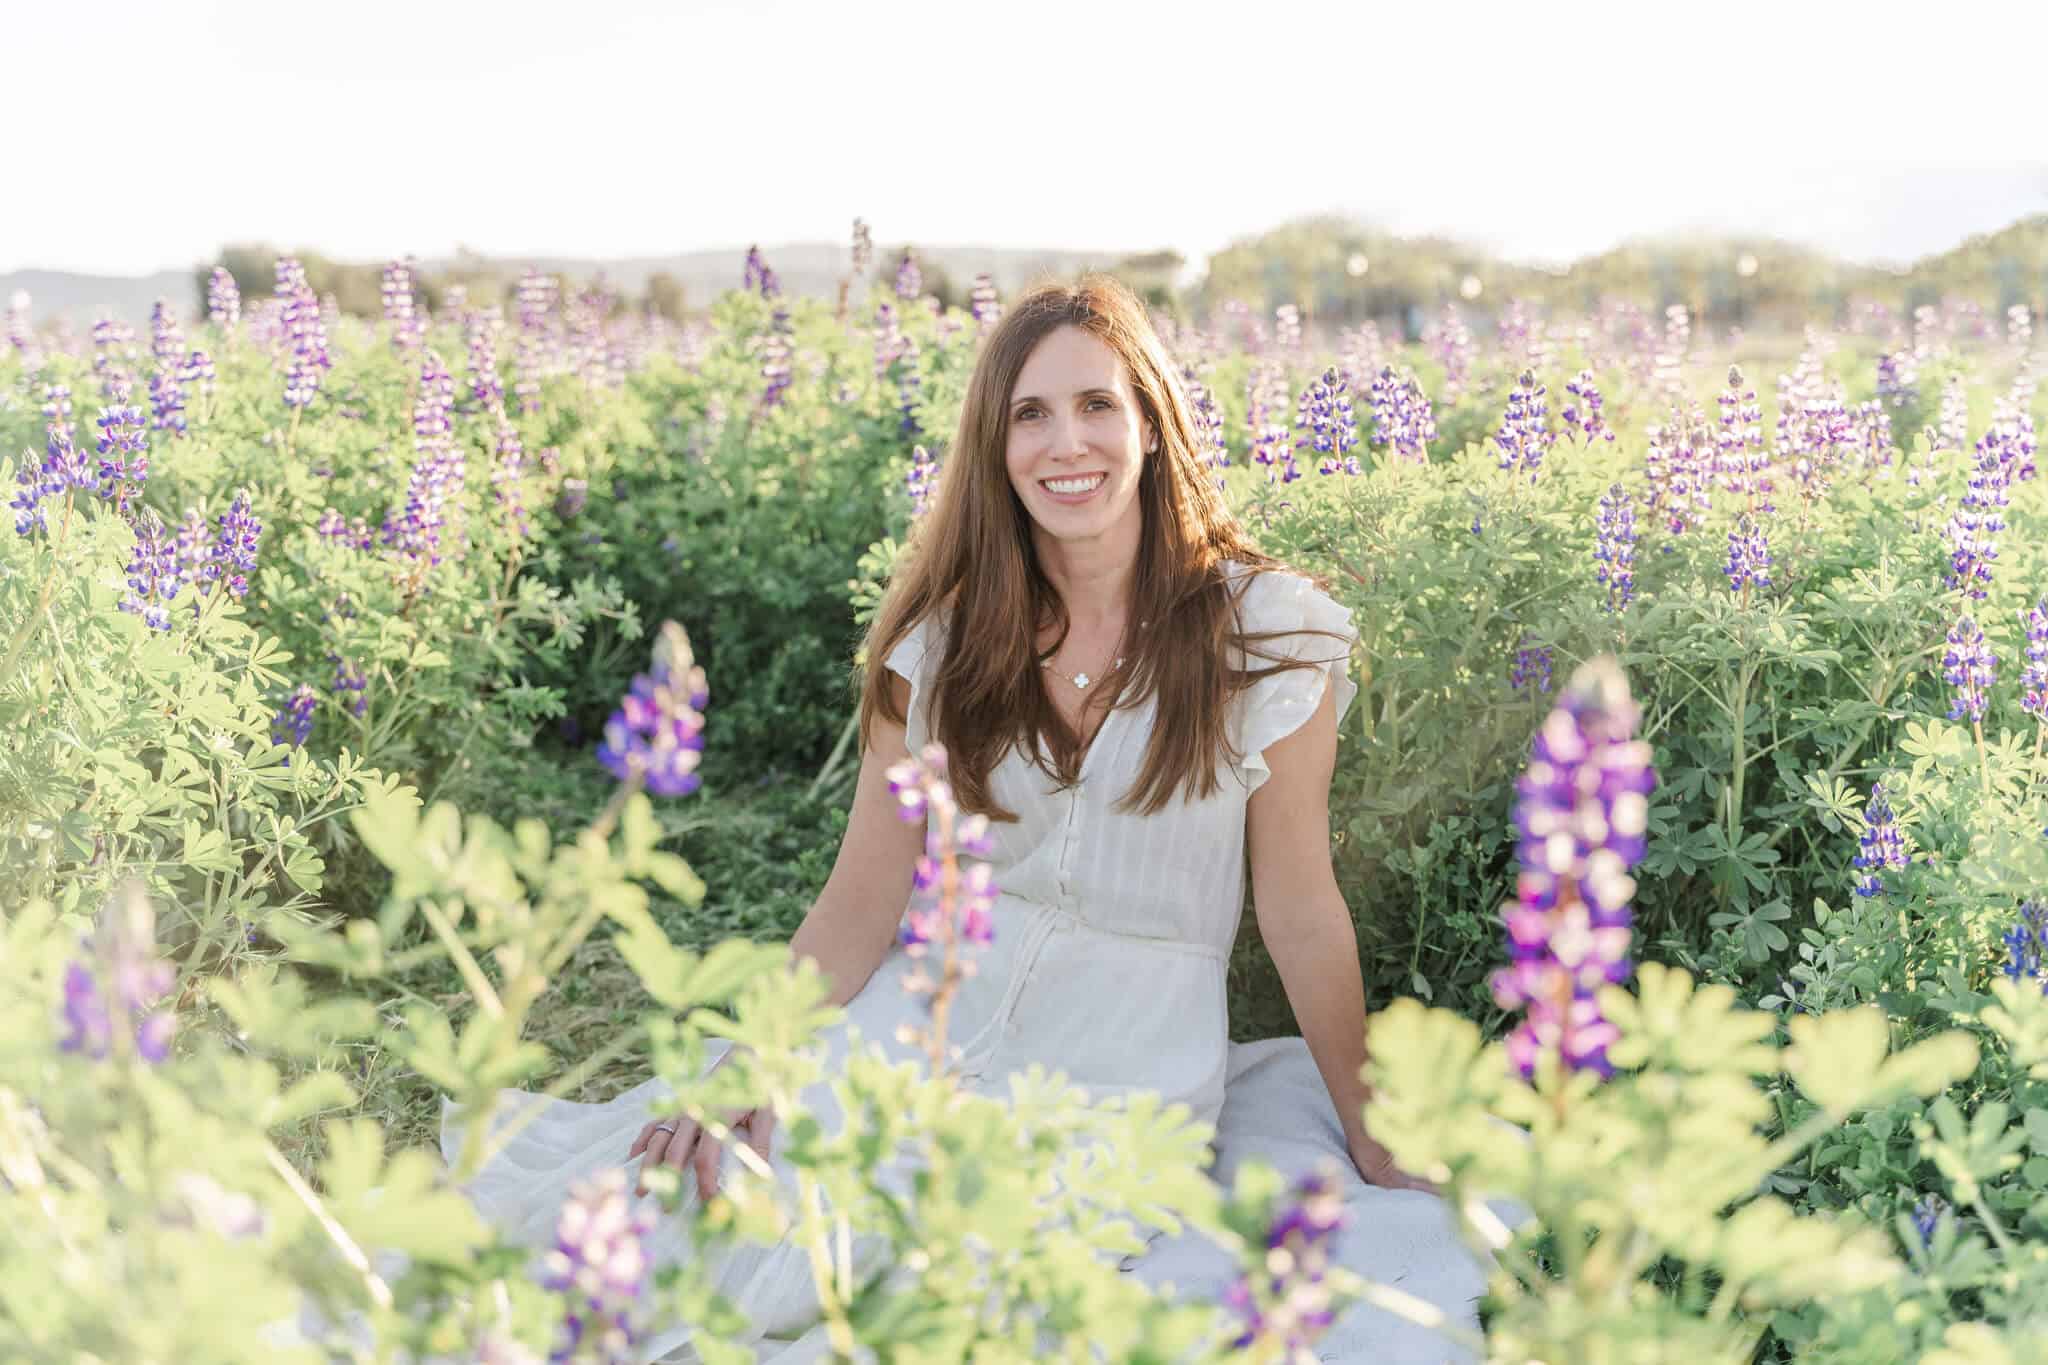 Smiling brunette woman in white dress sitting in a green field of purple lupin flowers